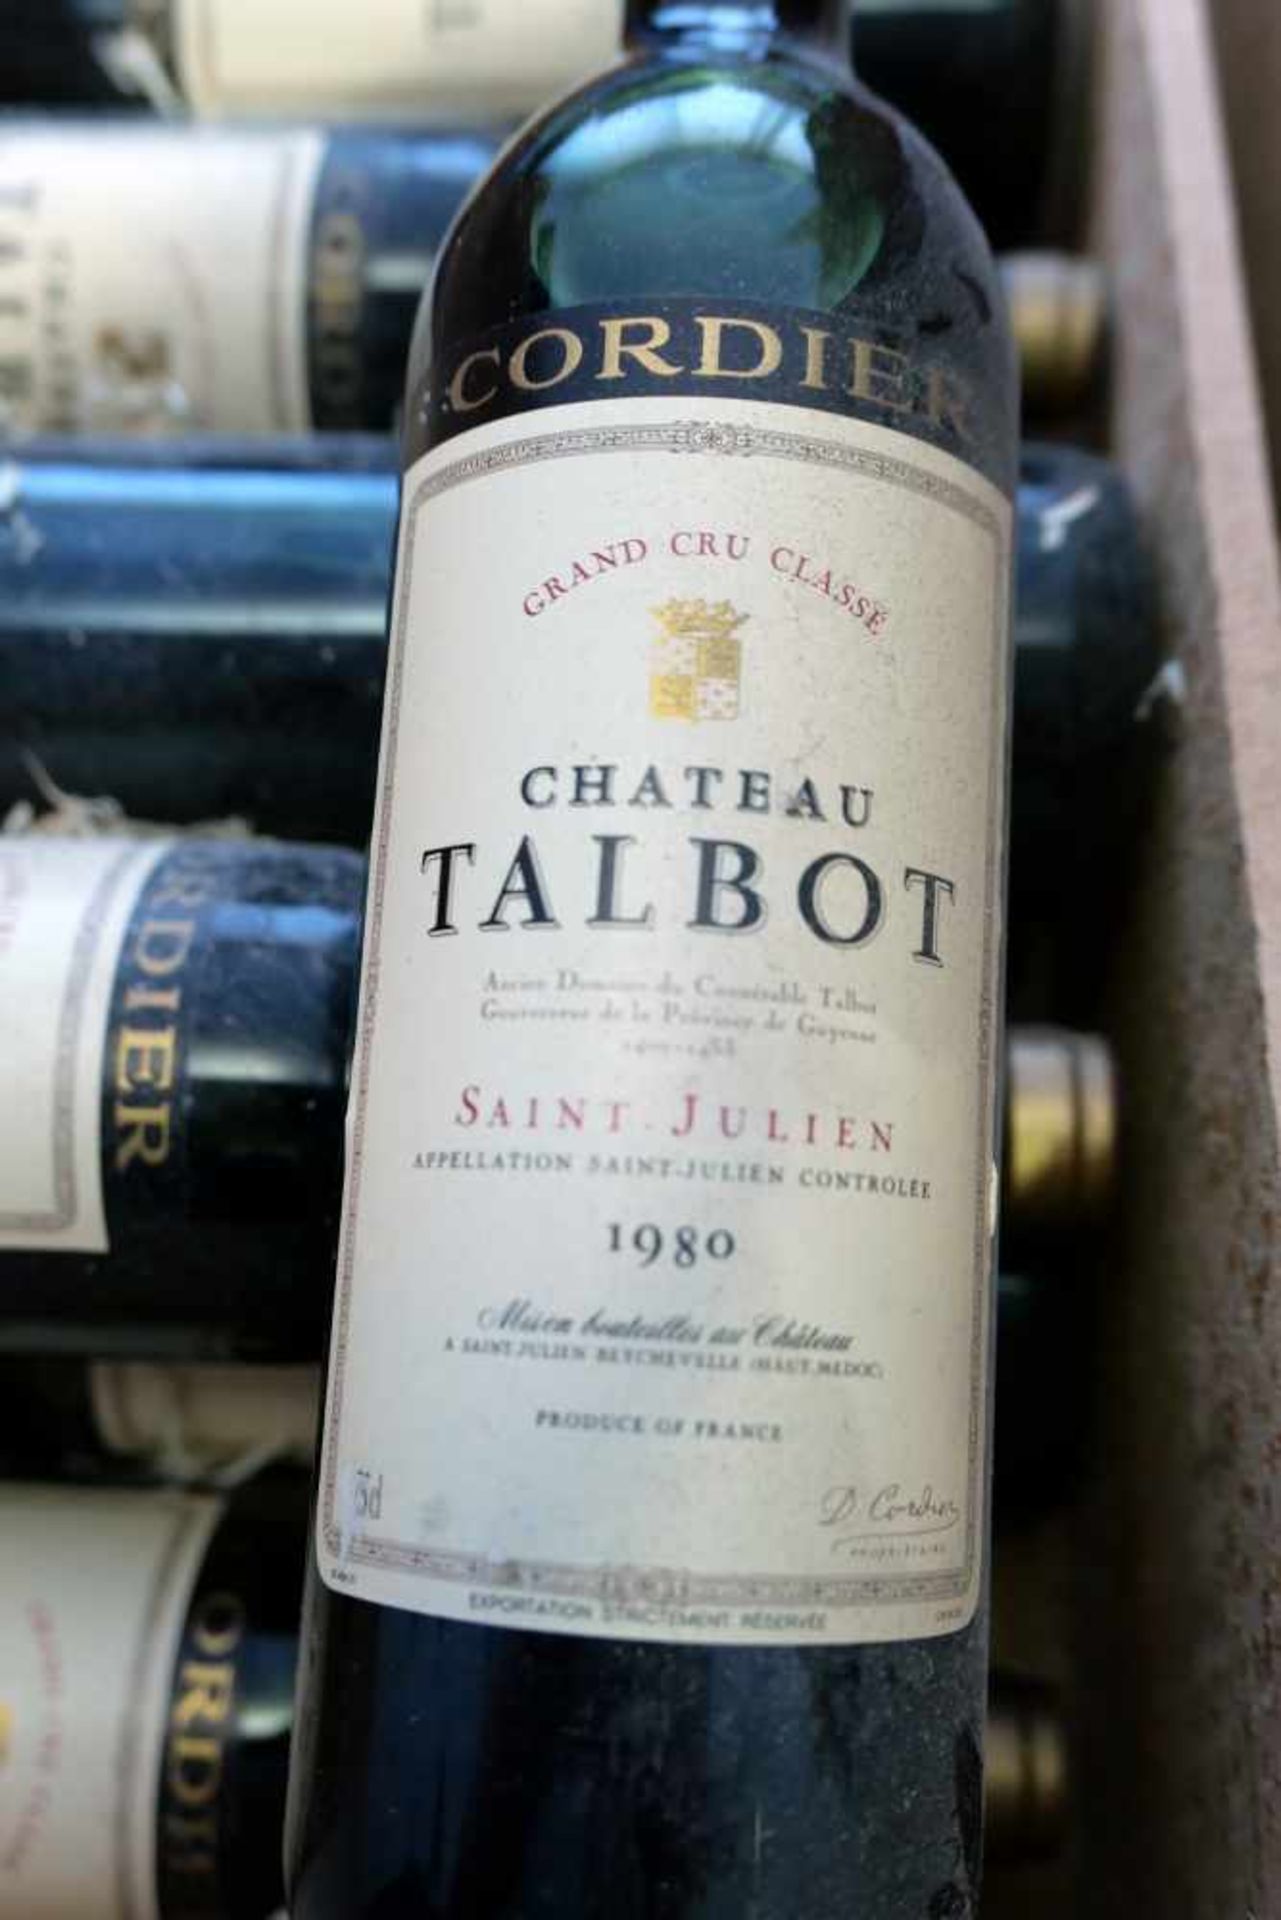 Chateau TalbotGrand Cru Classé D. Cordier, Jahrgang 1980, Holzkiste mit 12 Flaschen à 750 ml.